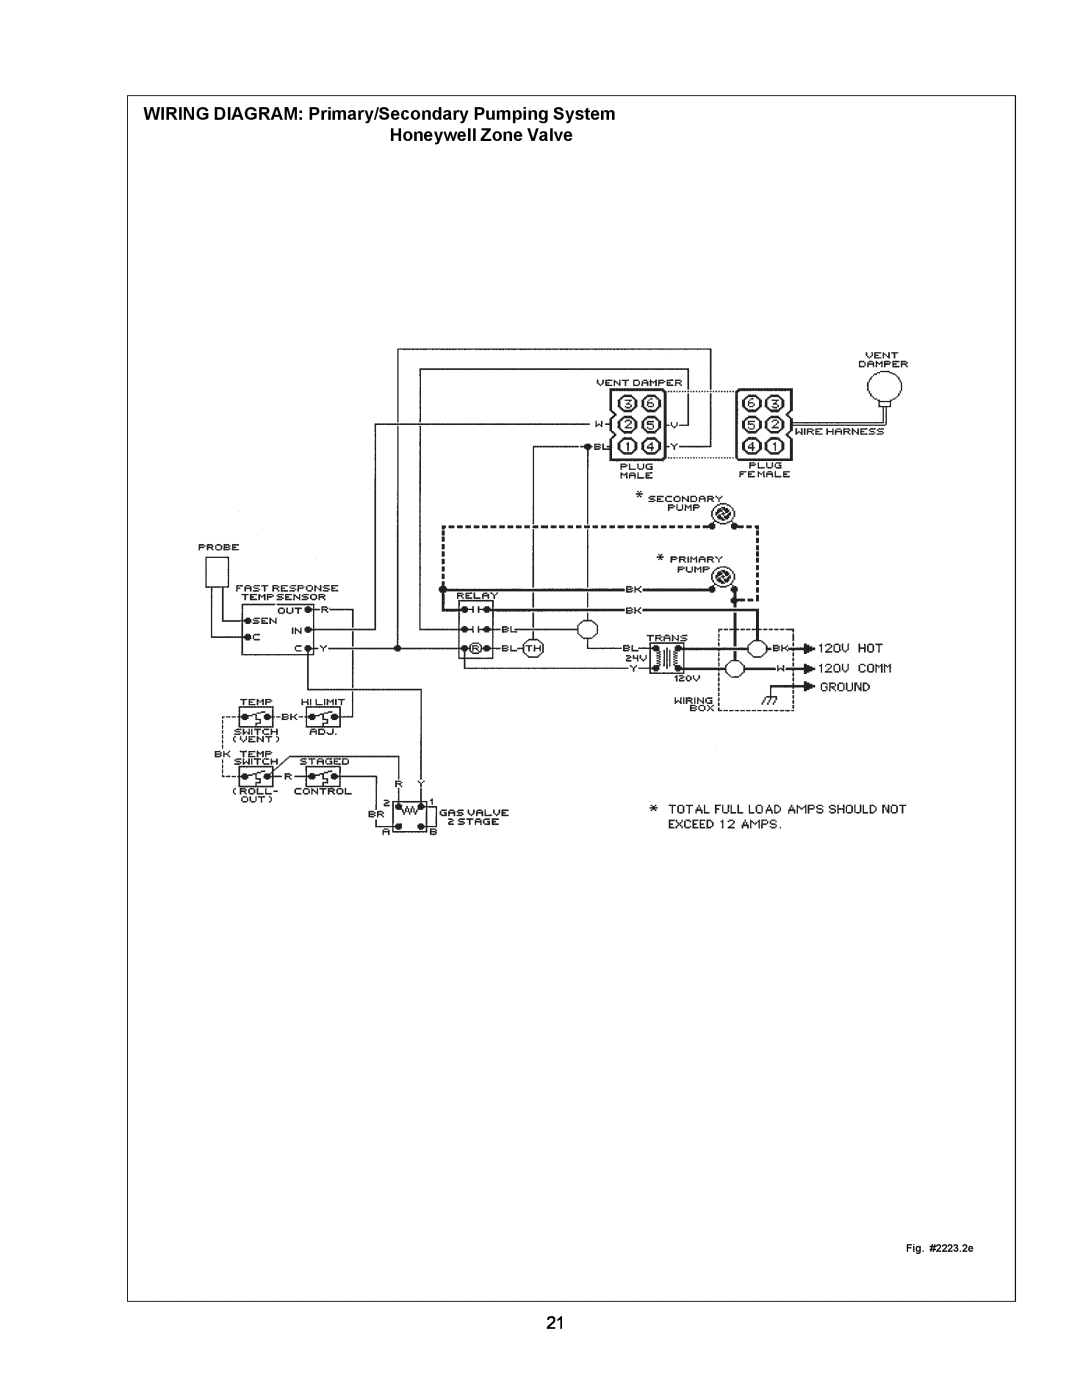 Raypak 0030B, 0090B, 0135B manual WIRING DIAGRAM Primary/Secondary Pumping System, Honeywell Zone Valve, Fig. #2223.2e 